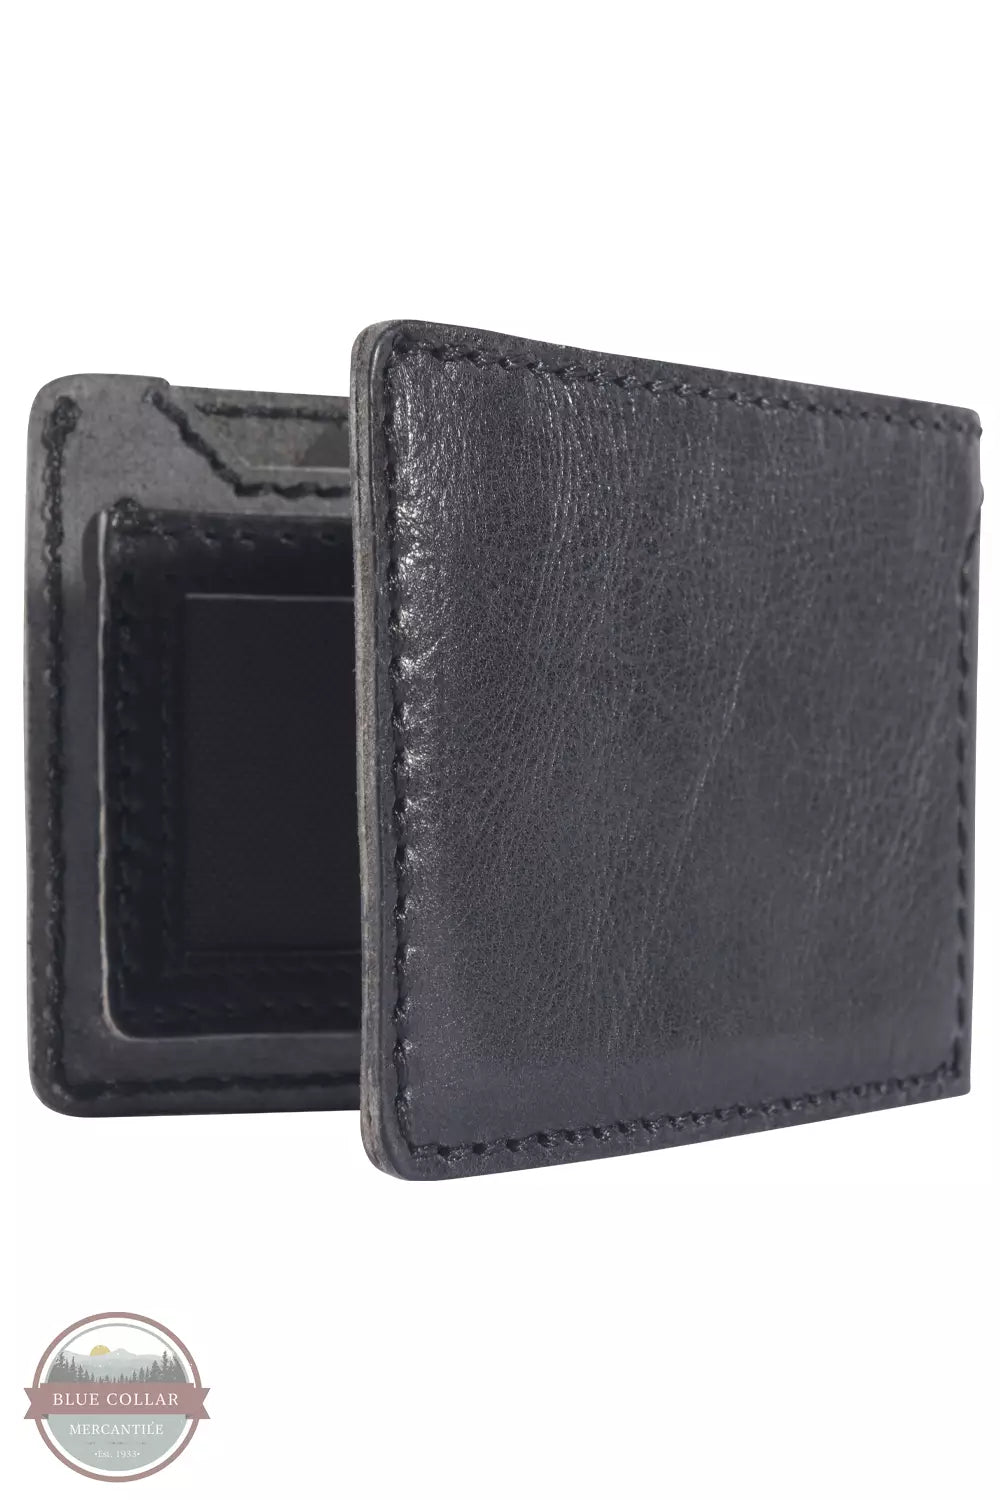 Carhartt B0000400 Patina Leather Bi-Fold Wallet Black Back View